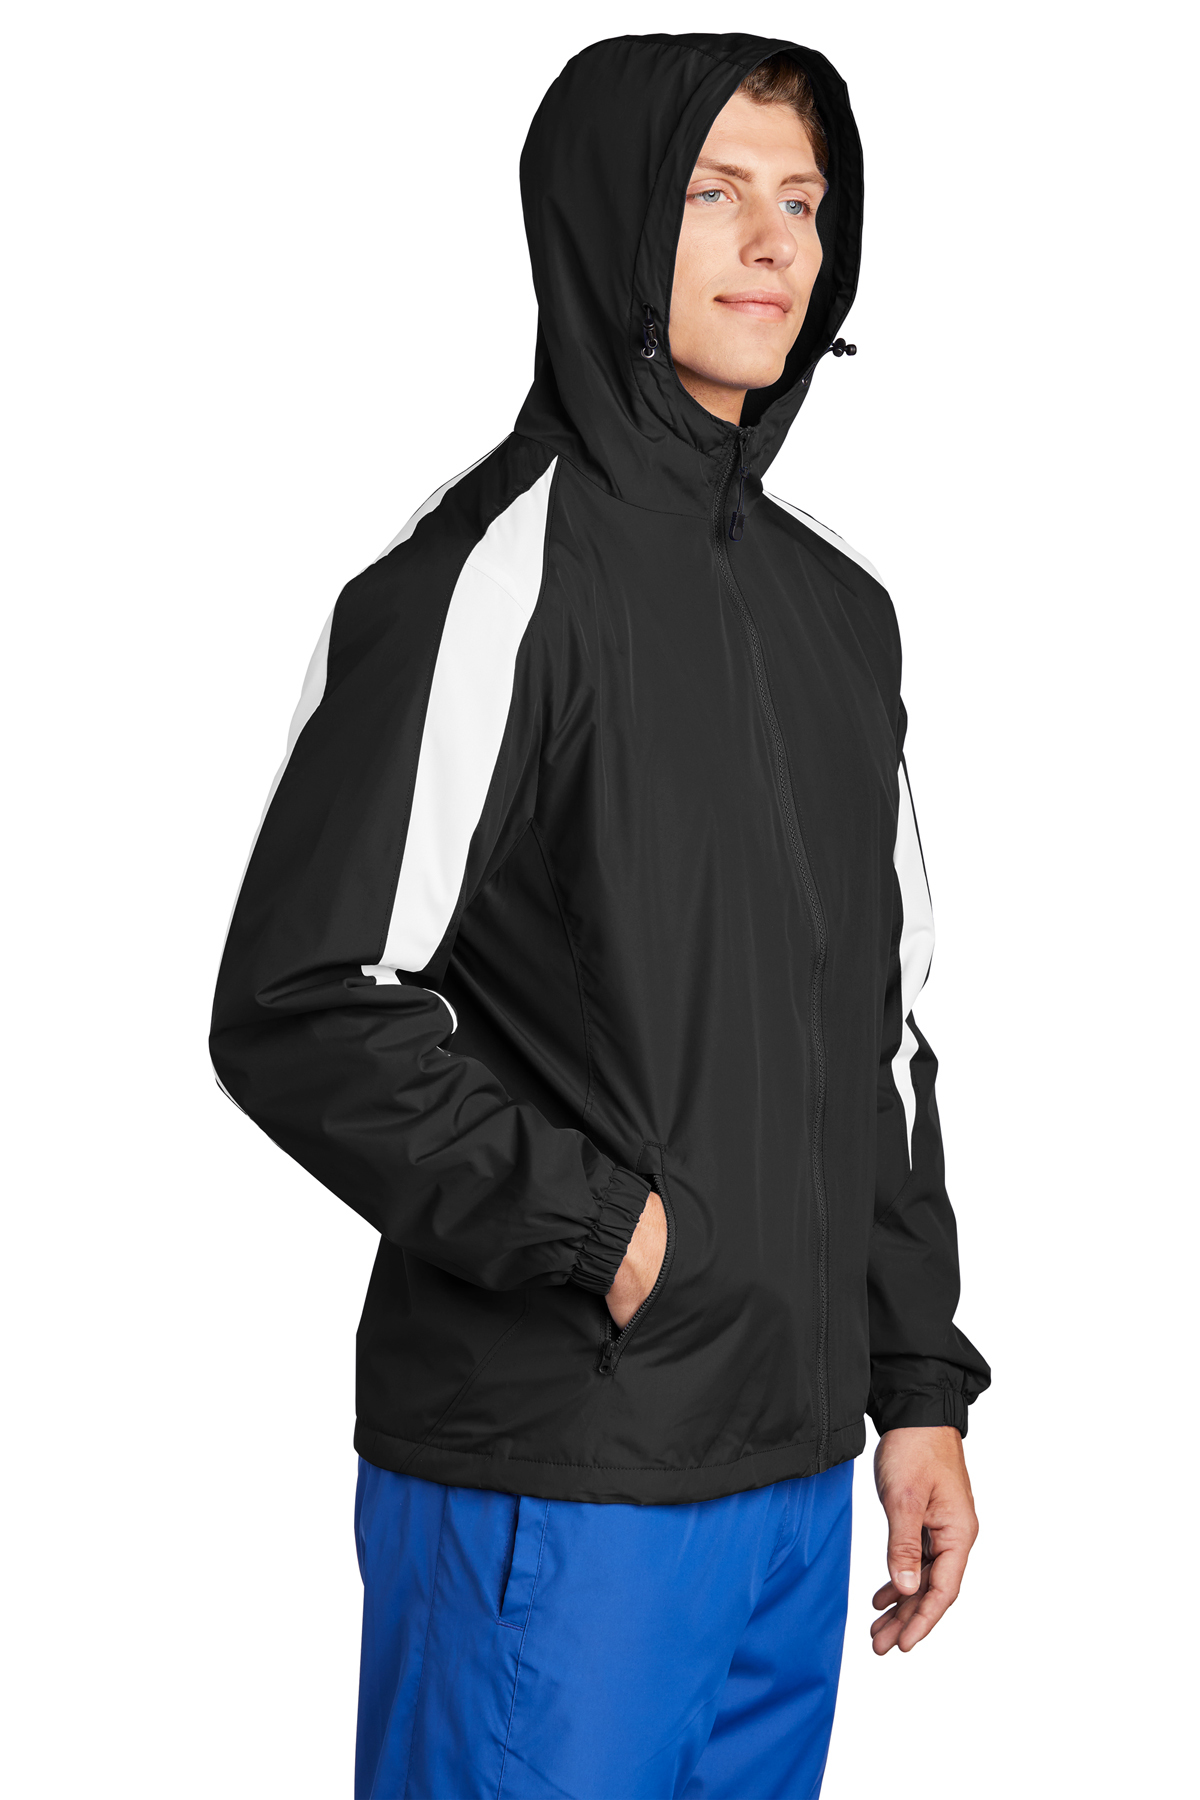 Sport-Tek Fleece-Lined Colorblock Jacket | Product | SanMar